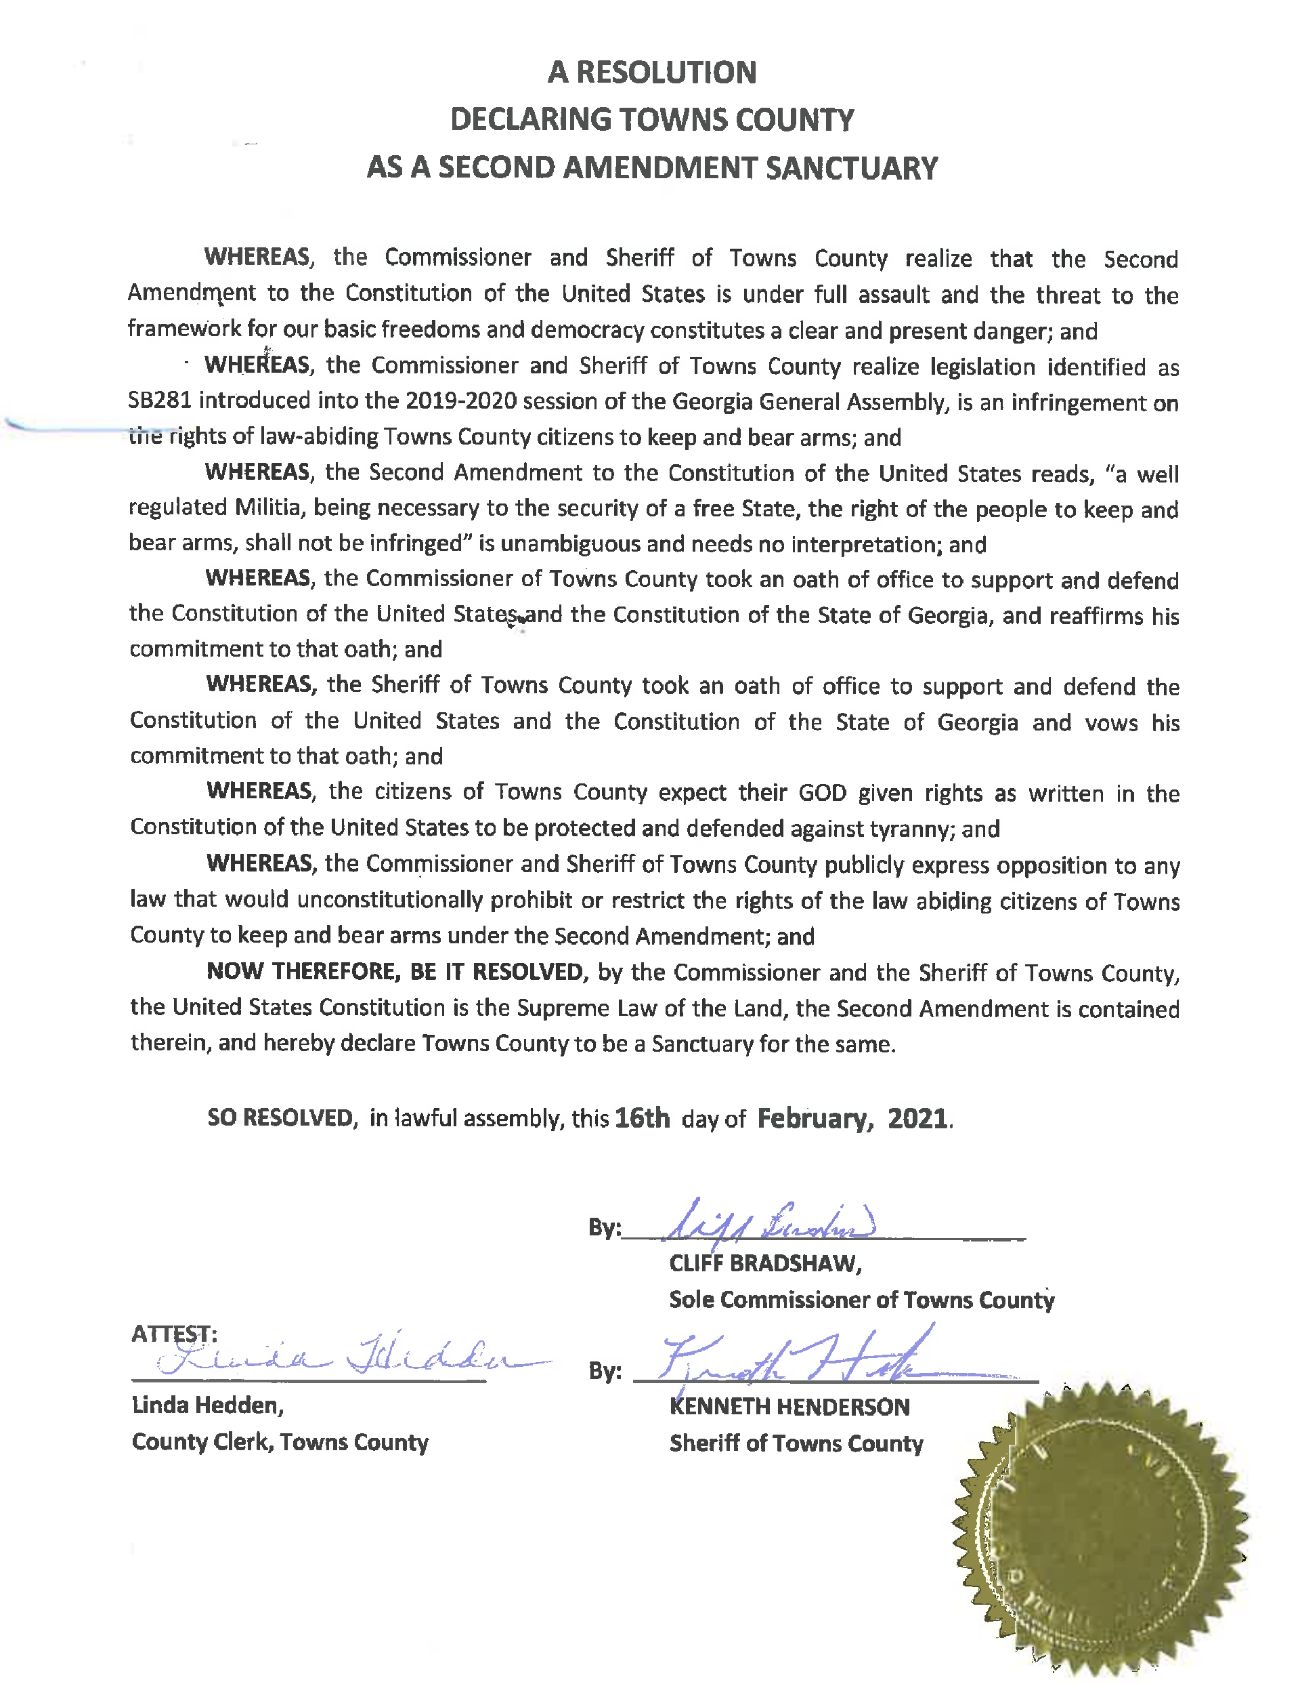 Towns County Georgia Second Amendment Sanctuary Resolution